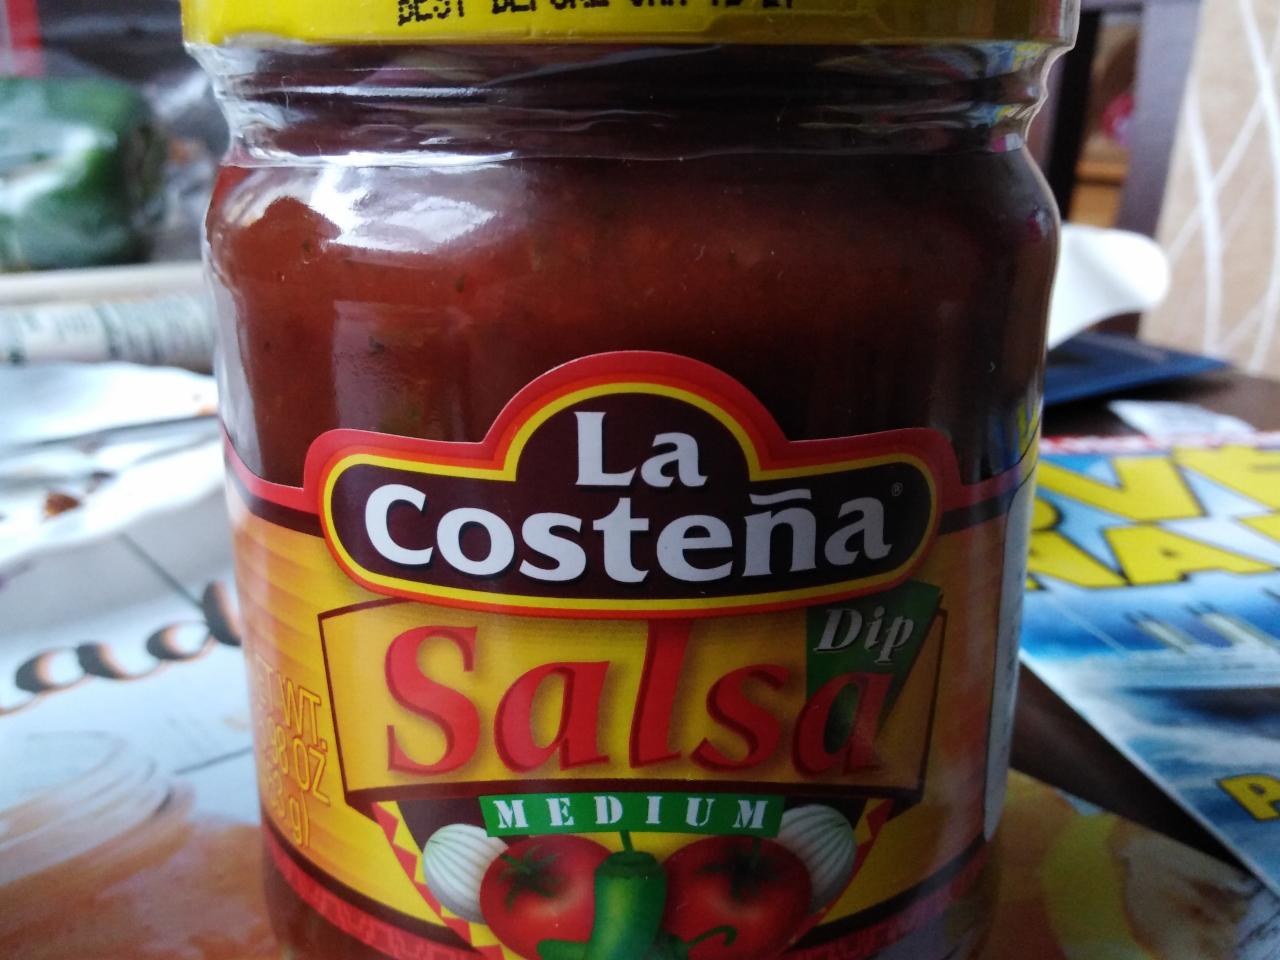 Fotografie - la costena salsa medium